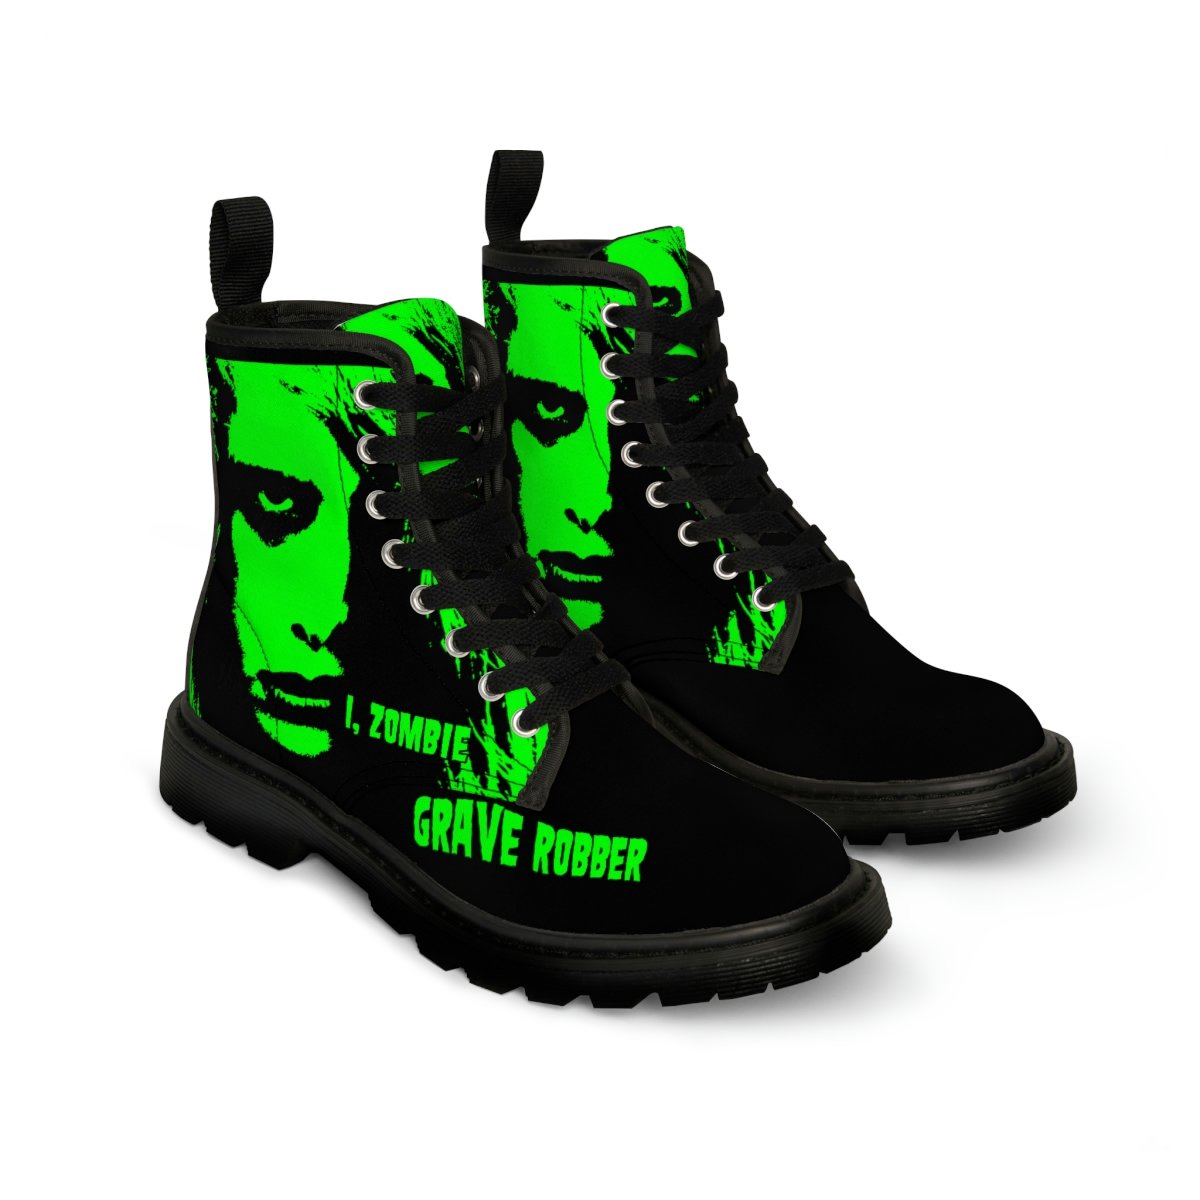 Grave Robber – I, Zombie Men’s Canvas Boots